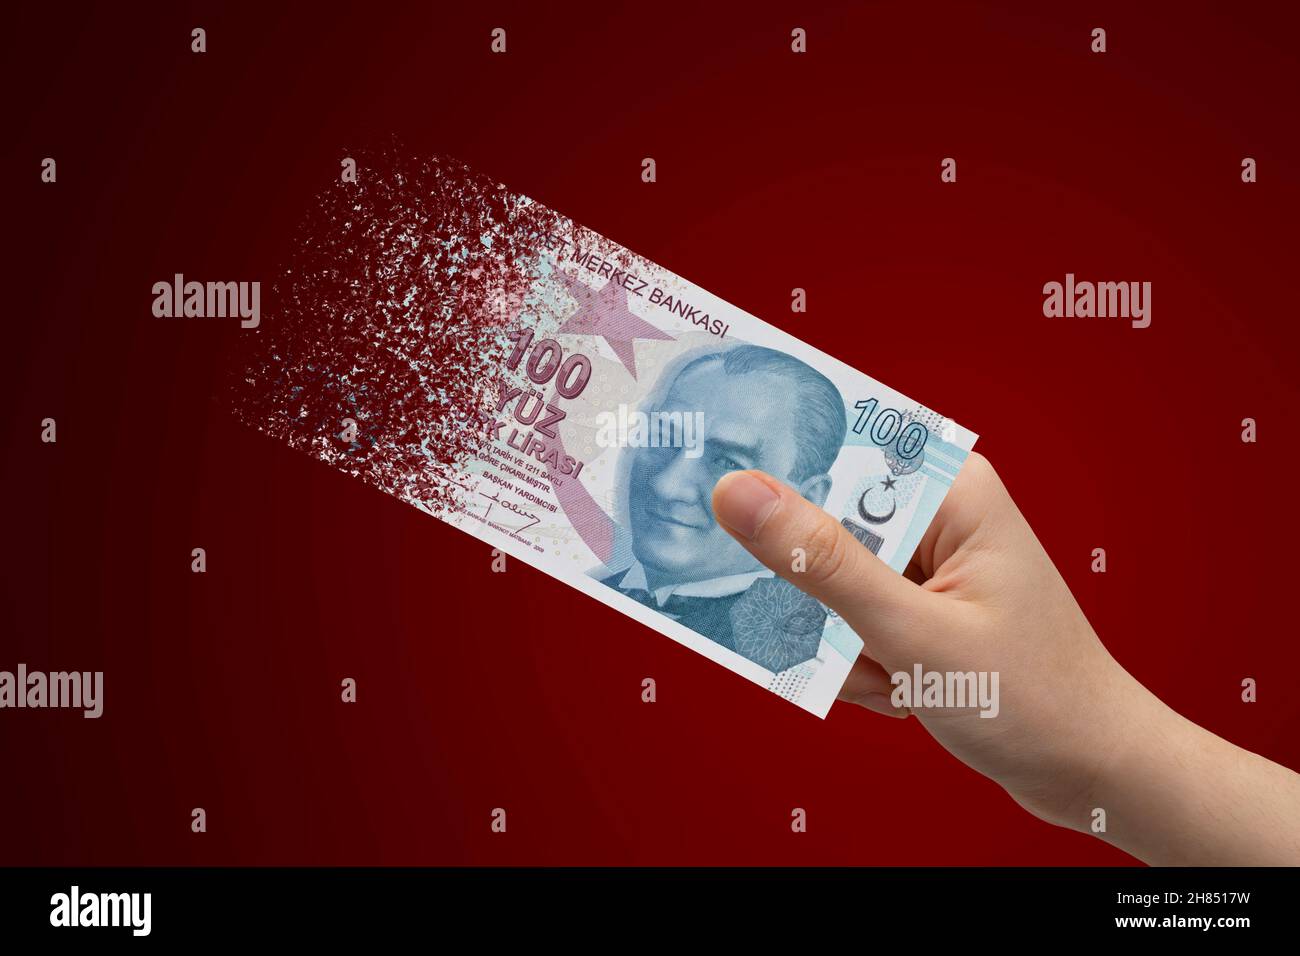 hand holding money. Financial crisis concept Stock Photo